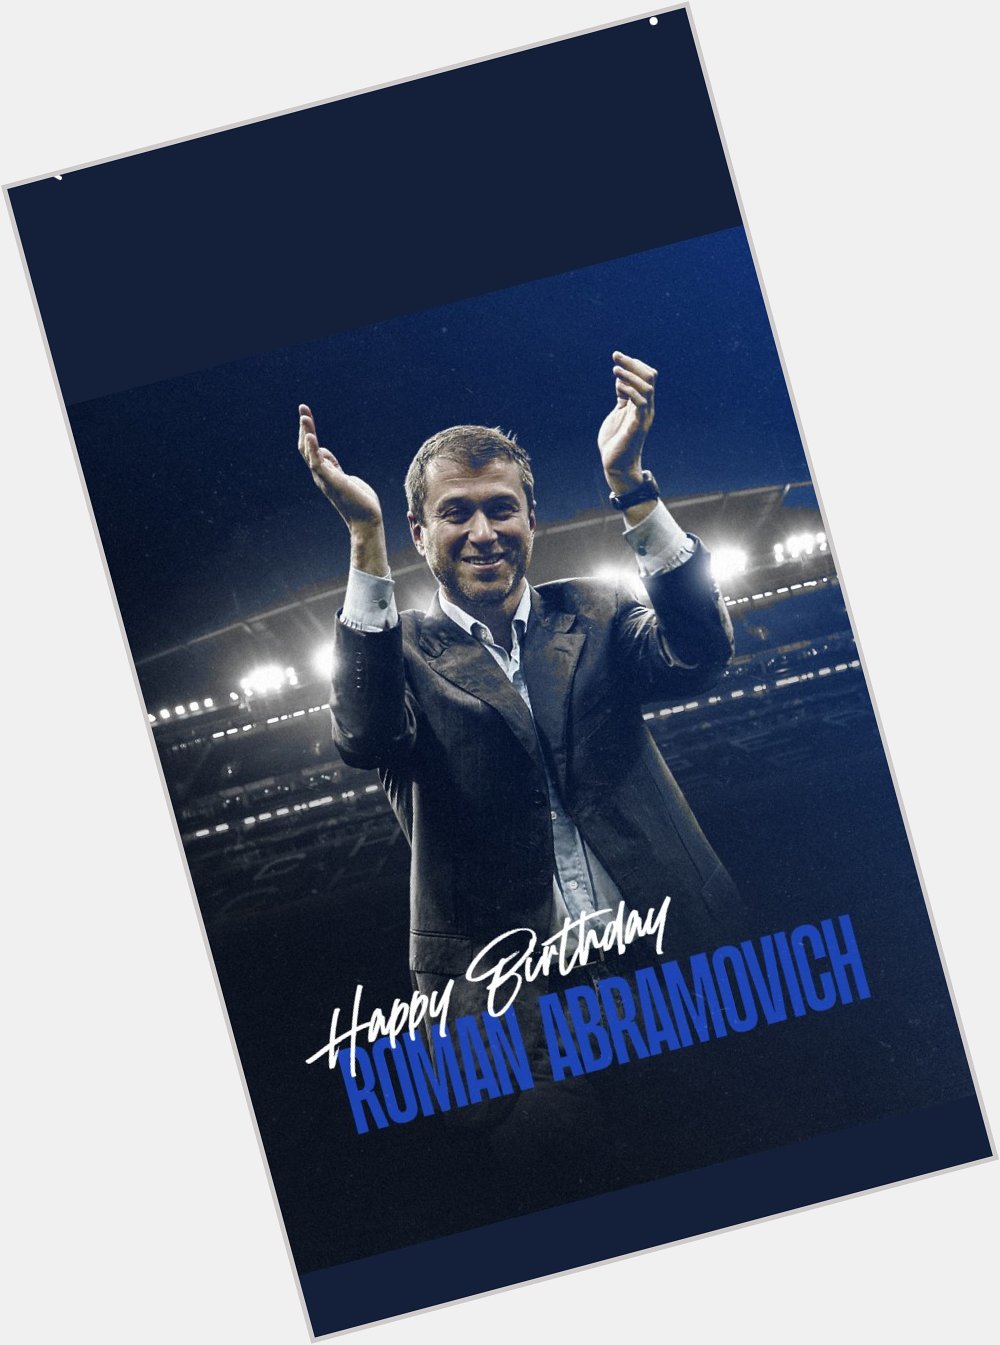 Happy birthday, Roman Abramovich! 